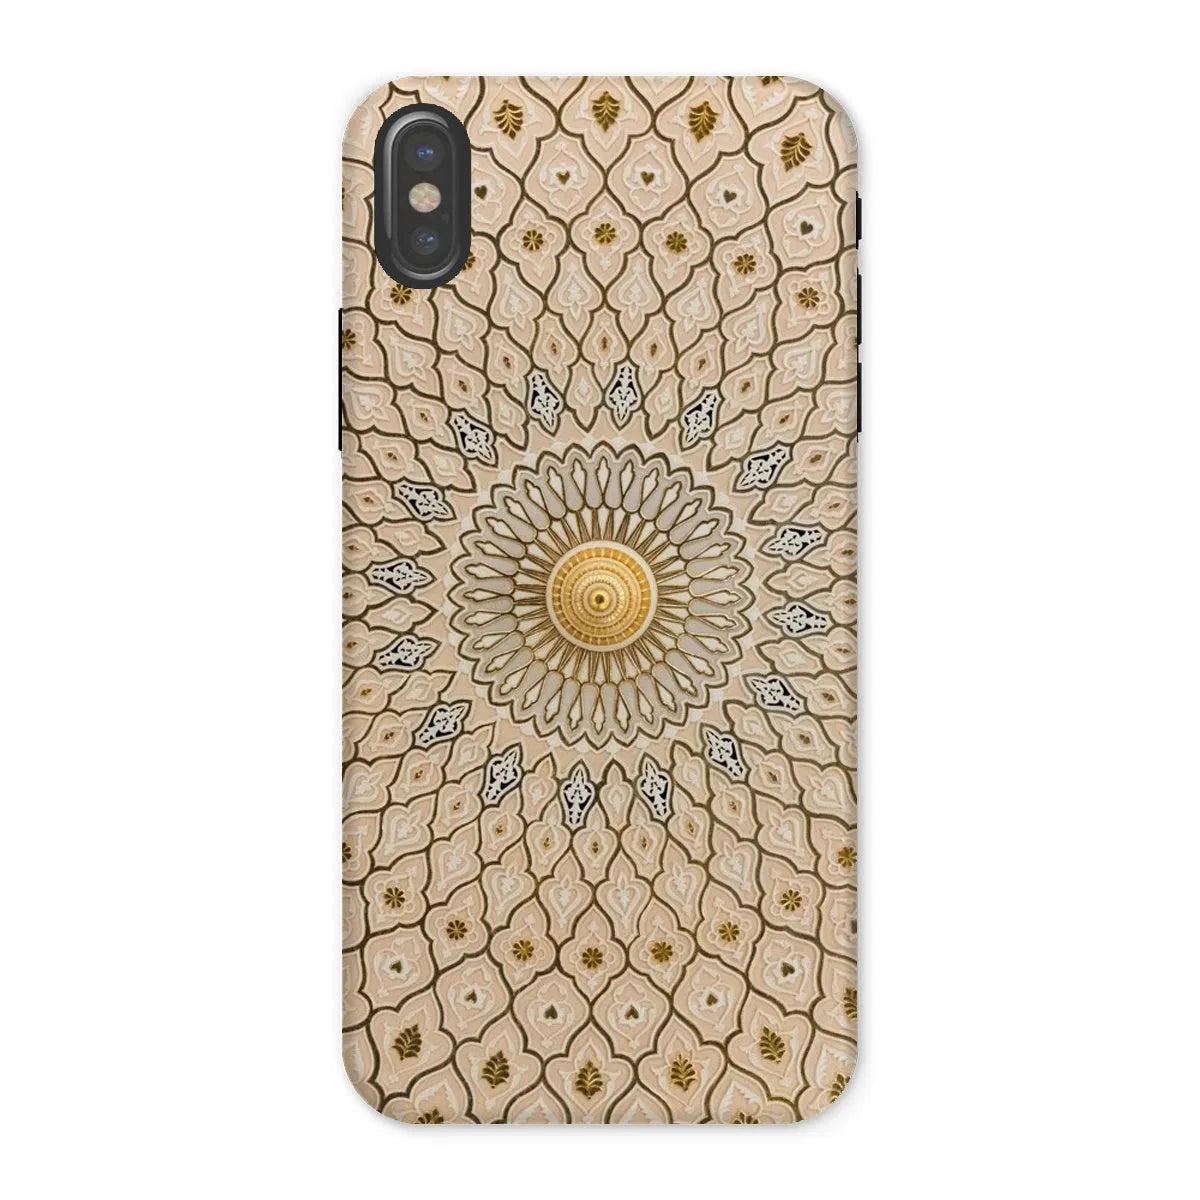 Divine Order - Islamic Aesthetic Art Phone Case - Iphone x / Matte - Mobile Phone Cases - Aesthetic Art